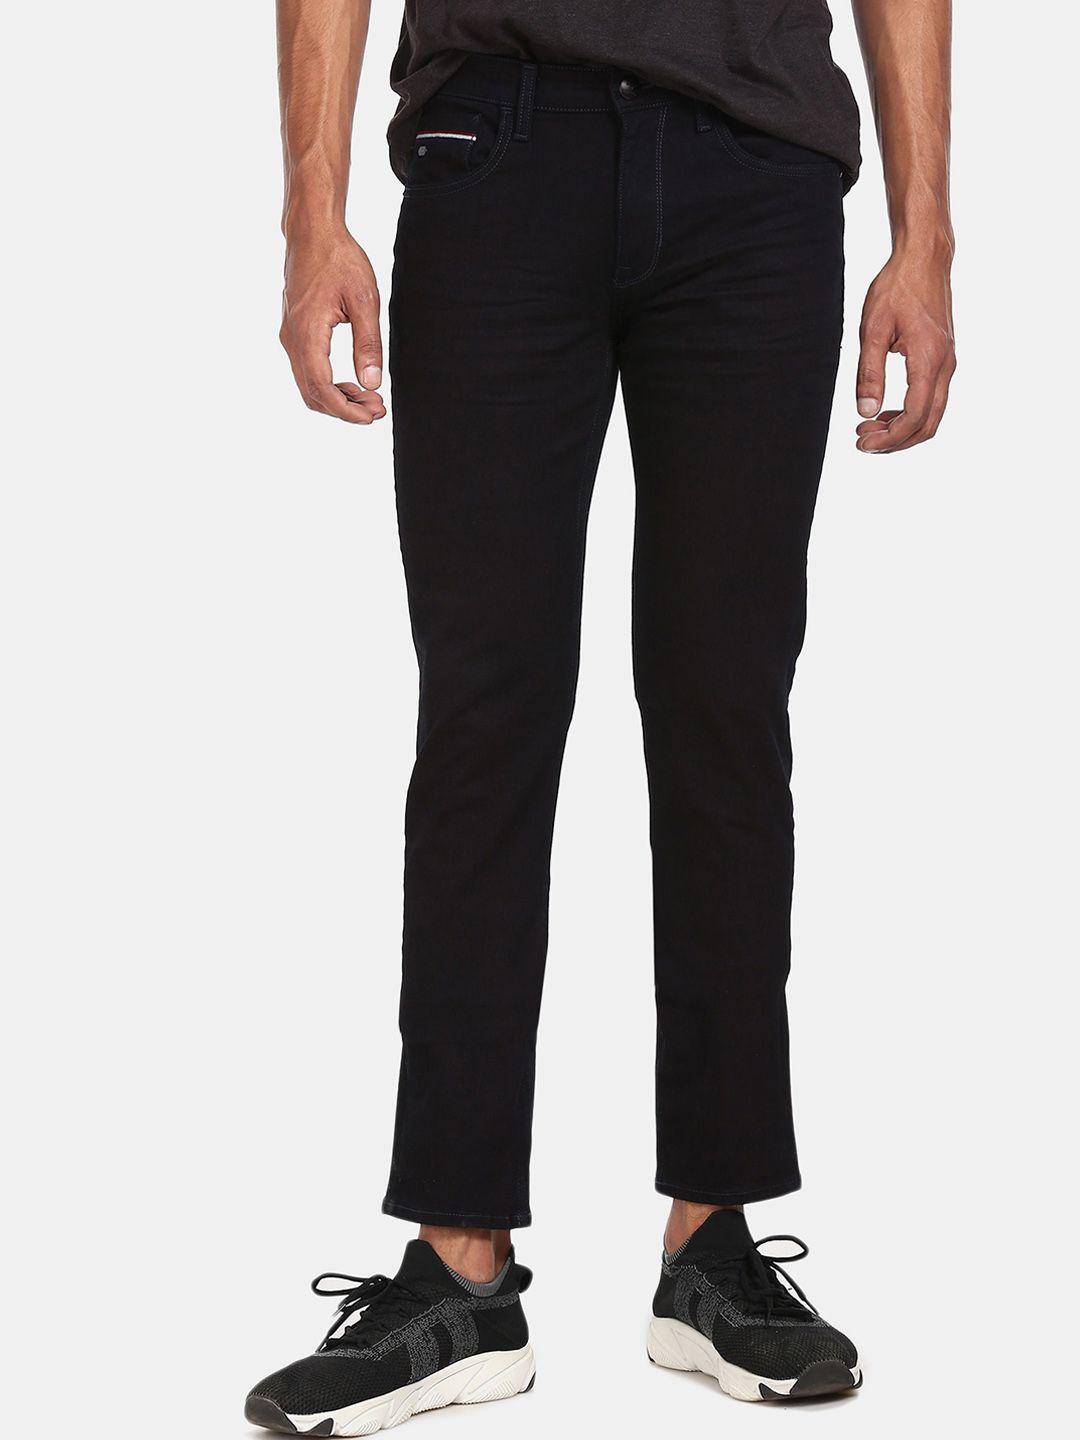 u.s. polo assn. denim co. men black regular fit mid-rise clean look jeans